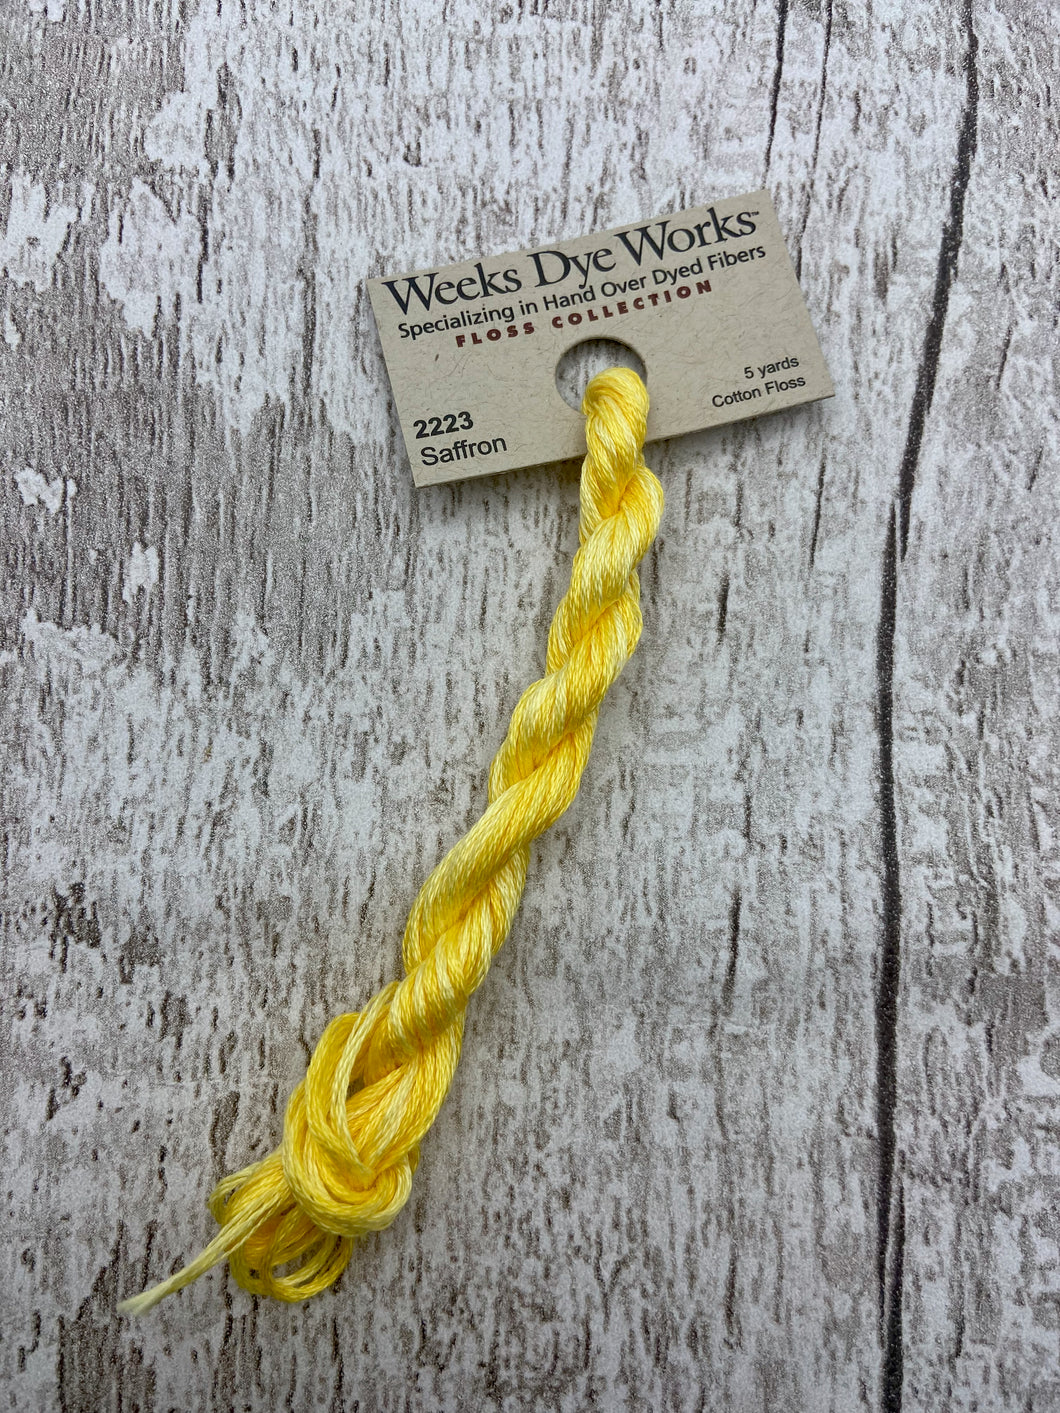 Saffron (#2223) Weeks Dye Works, 6-strand cotton floss